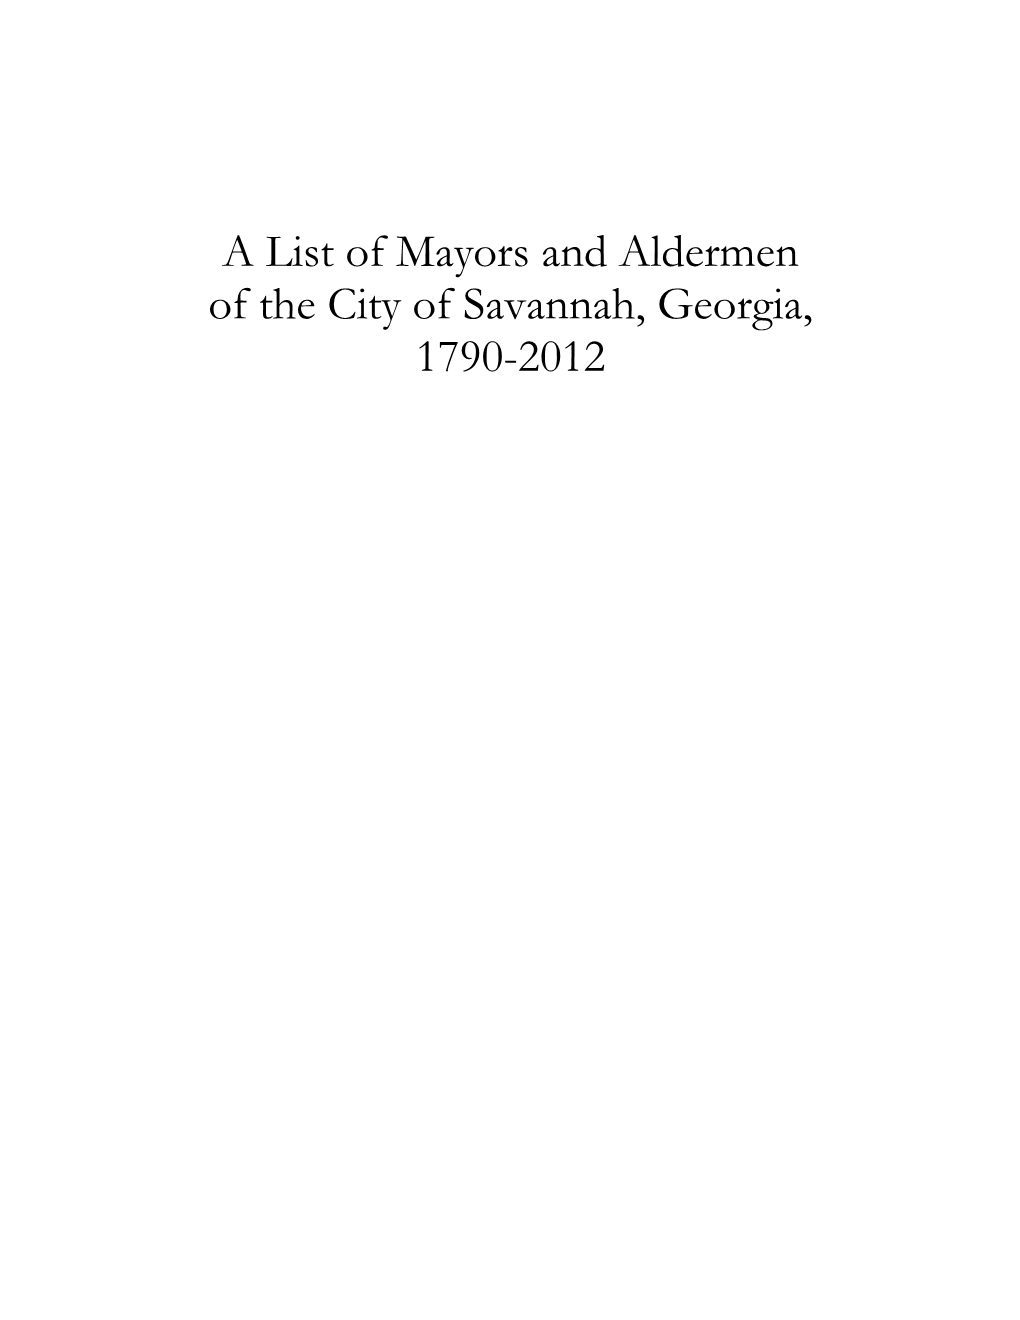 A List of Mayors and Aldermen of the City of Savannah, Georgia, 1790-2012